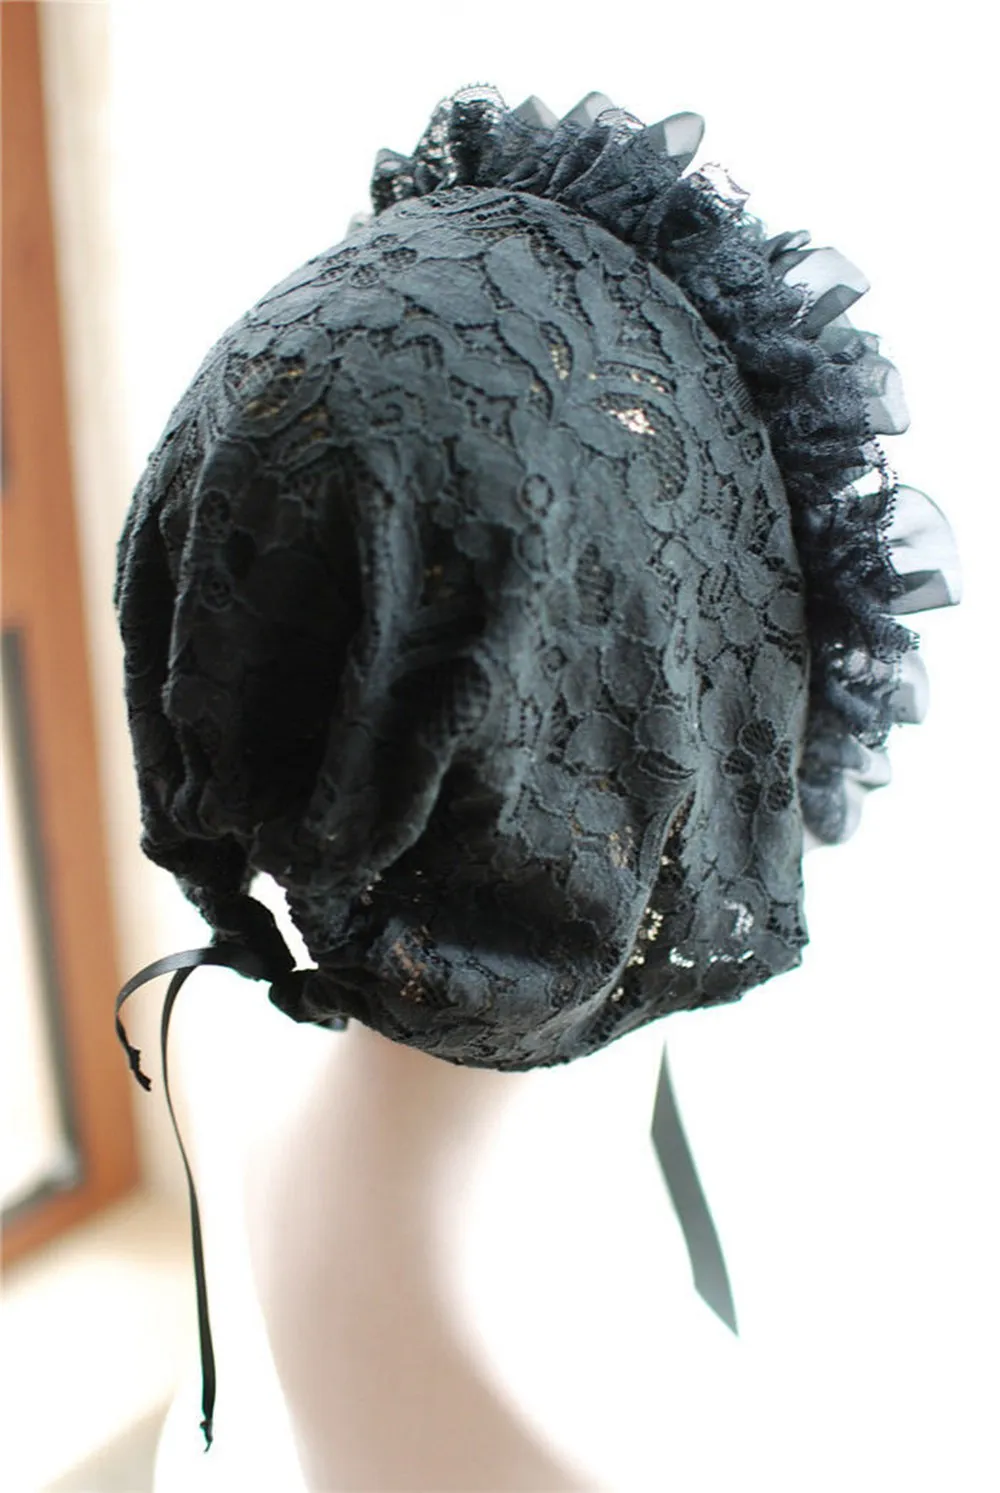 Women Victorian Lace Bonnet Cute Lolita Vintage Black White Maid Cosplay Costume Hat Headwear Fast Shipment